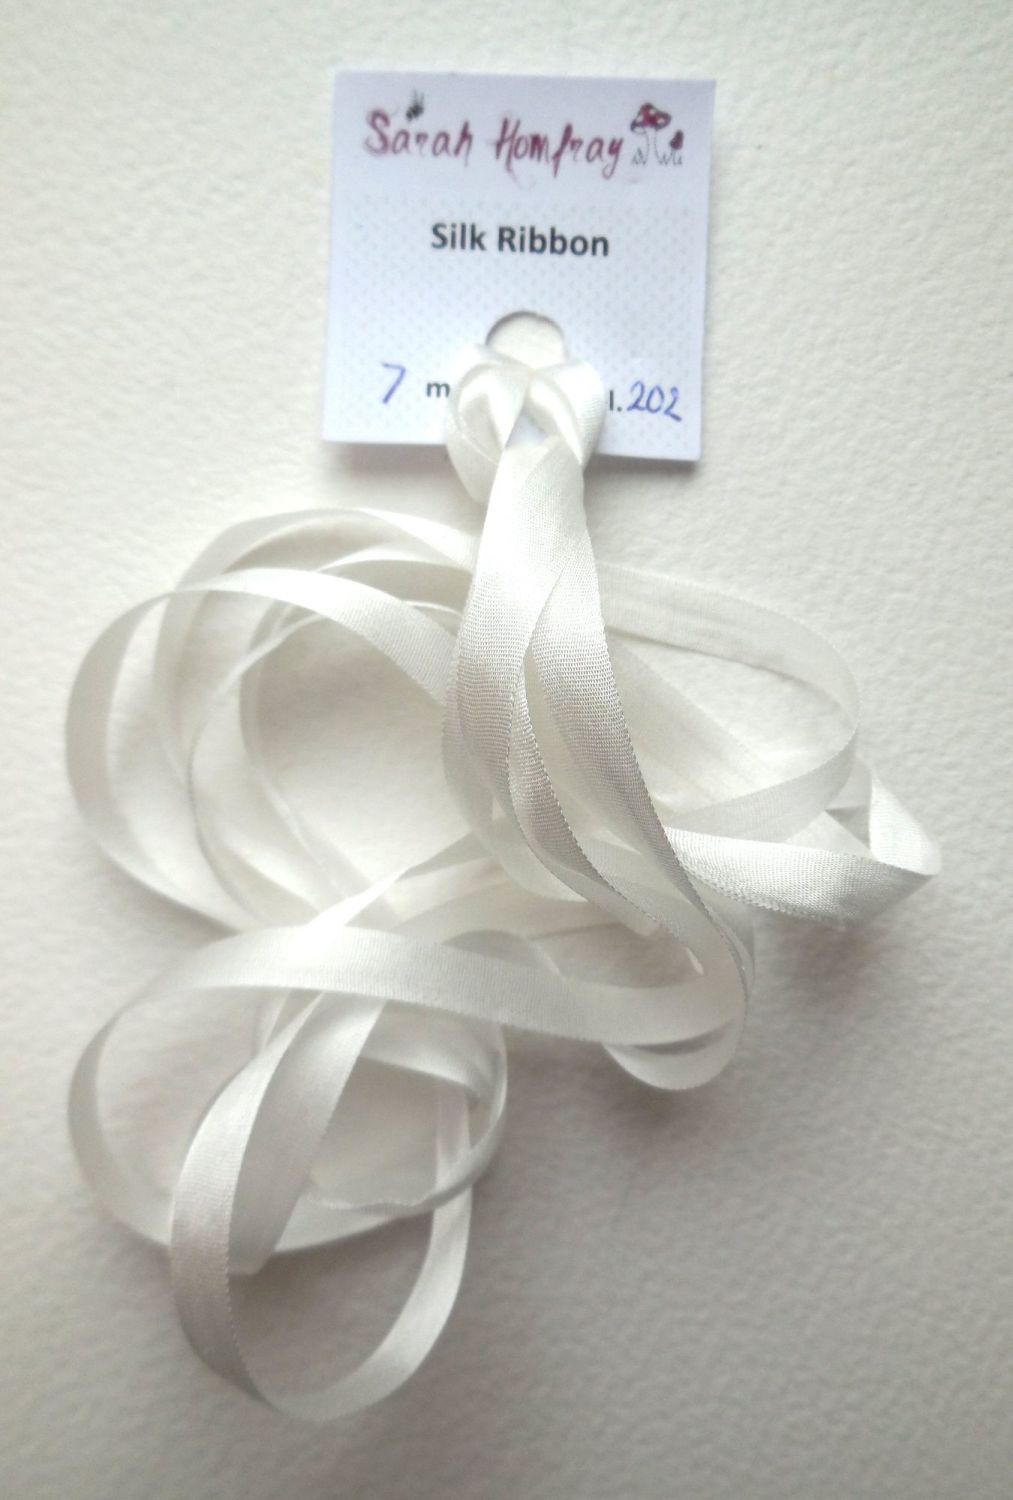 White 7mm 202 silk ribbon